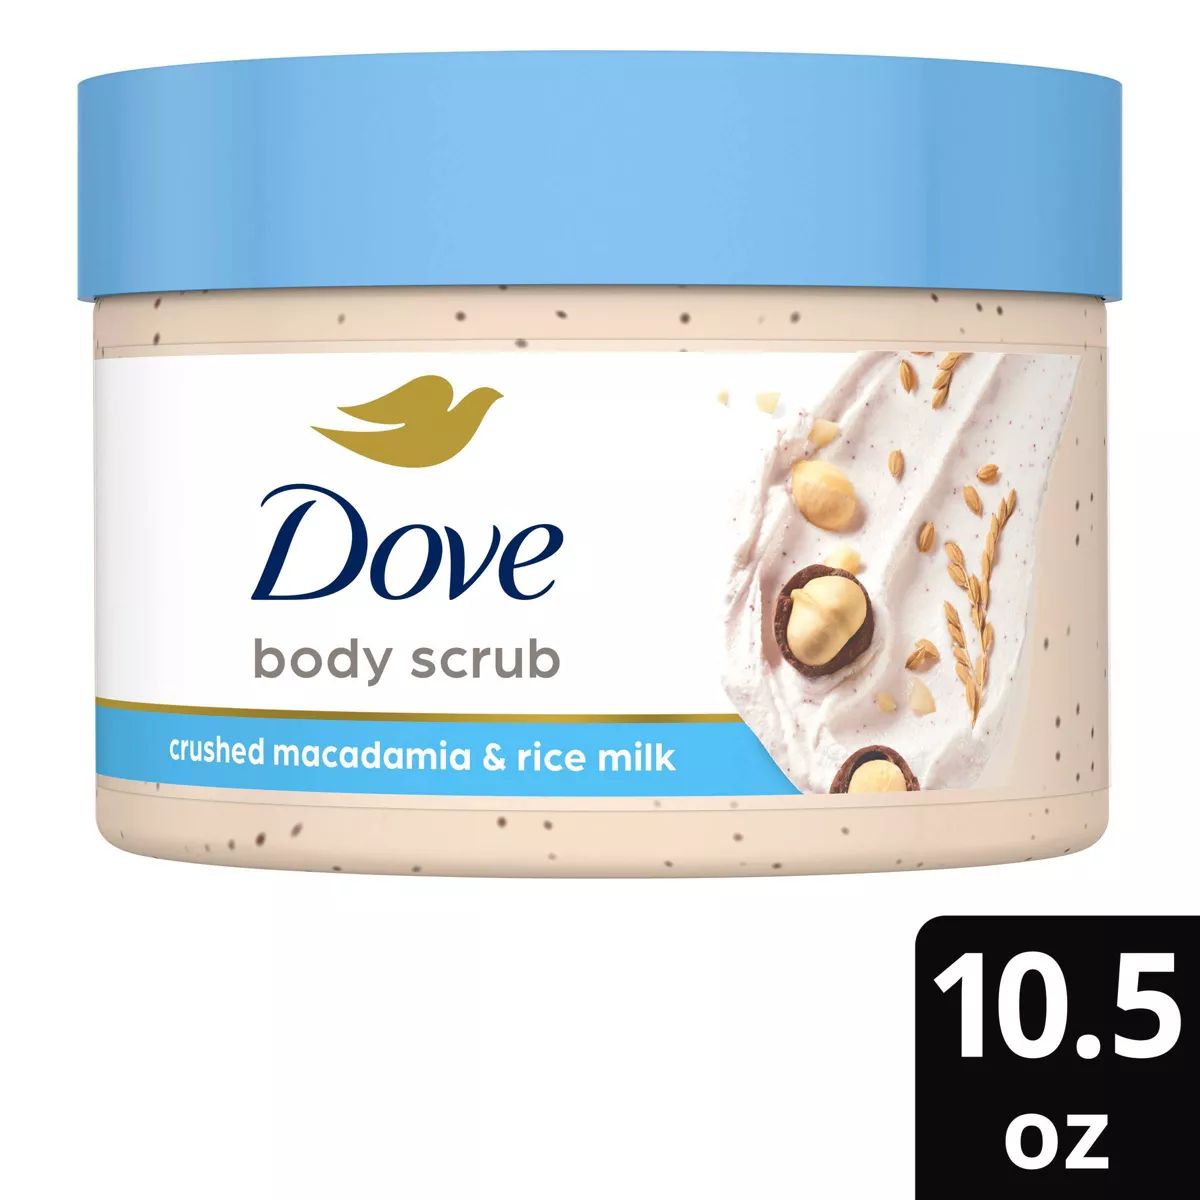 Dove Crushed Macadamia & Rice Milk Exfoliating Body Scrub - 10.5 oz | Target